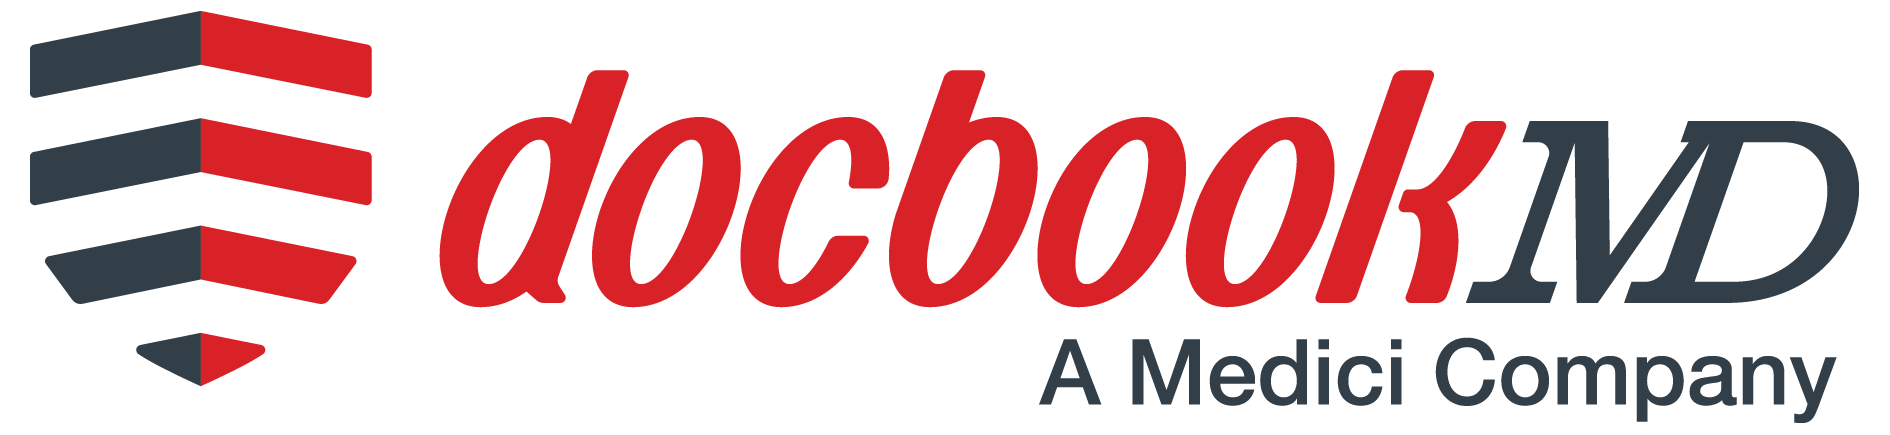 DocbookMD Shield logo small